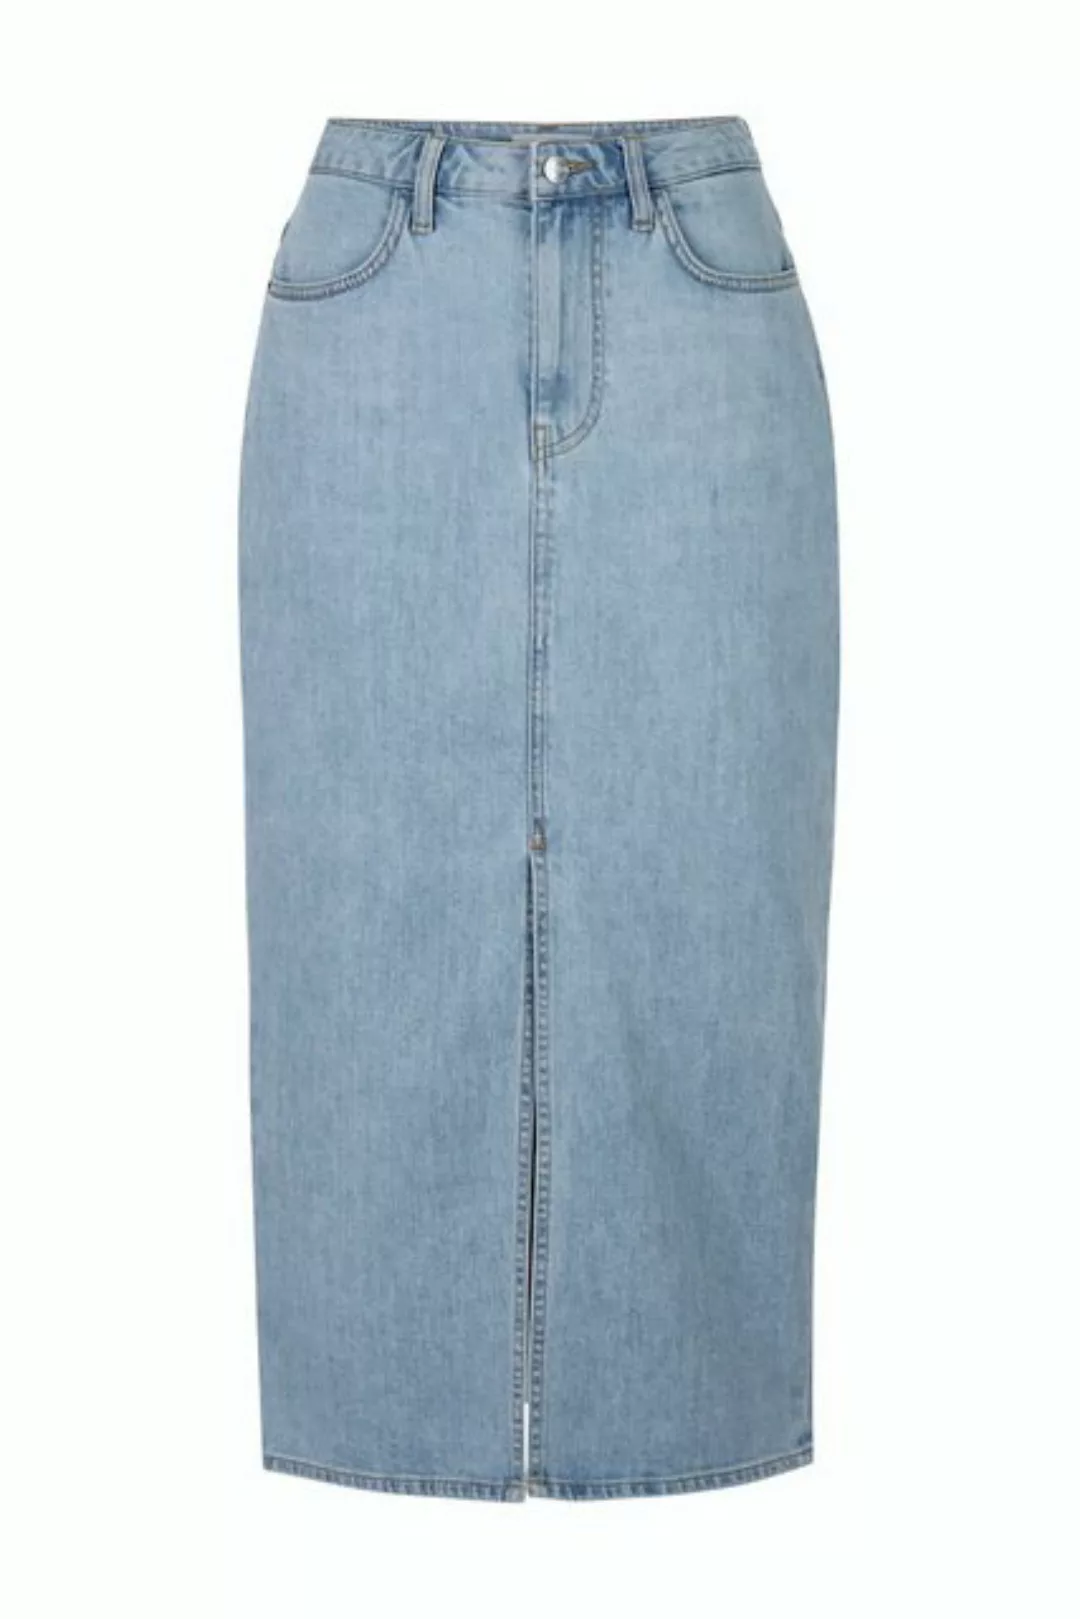 Rich & Royal Sommerrock long blue denim skirt organic, denim blue günstig online kaufen